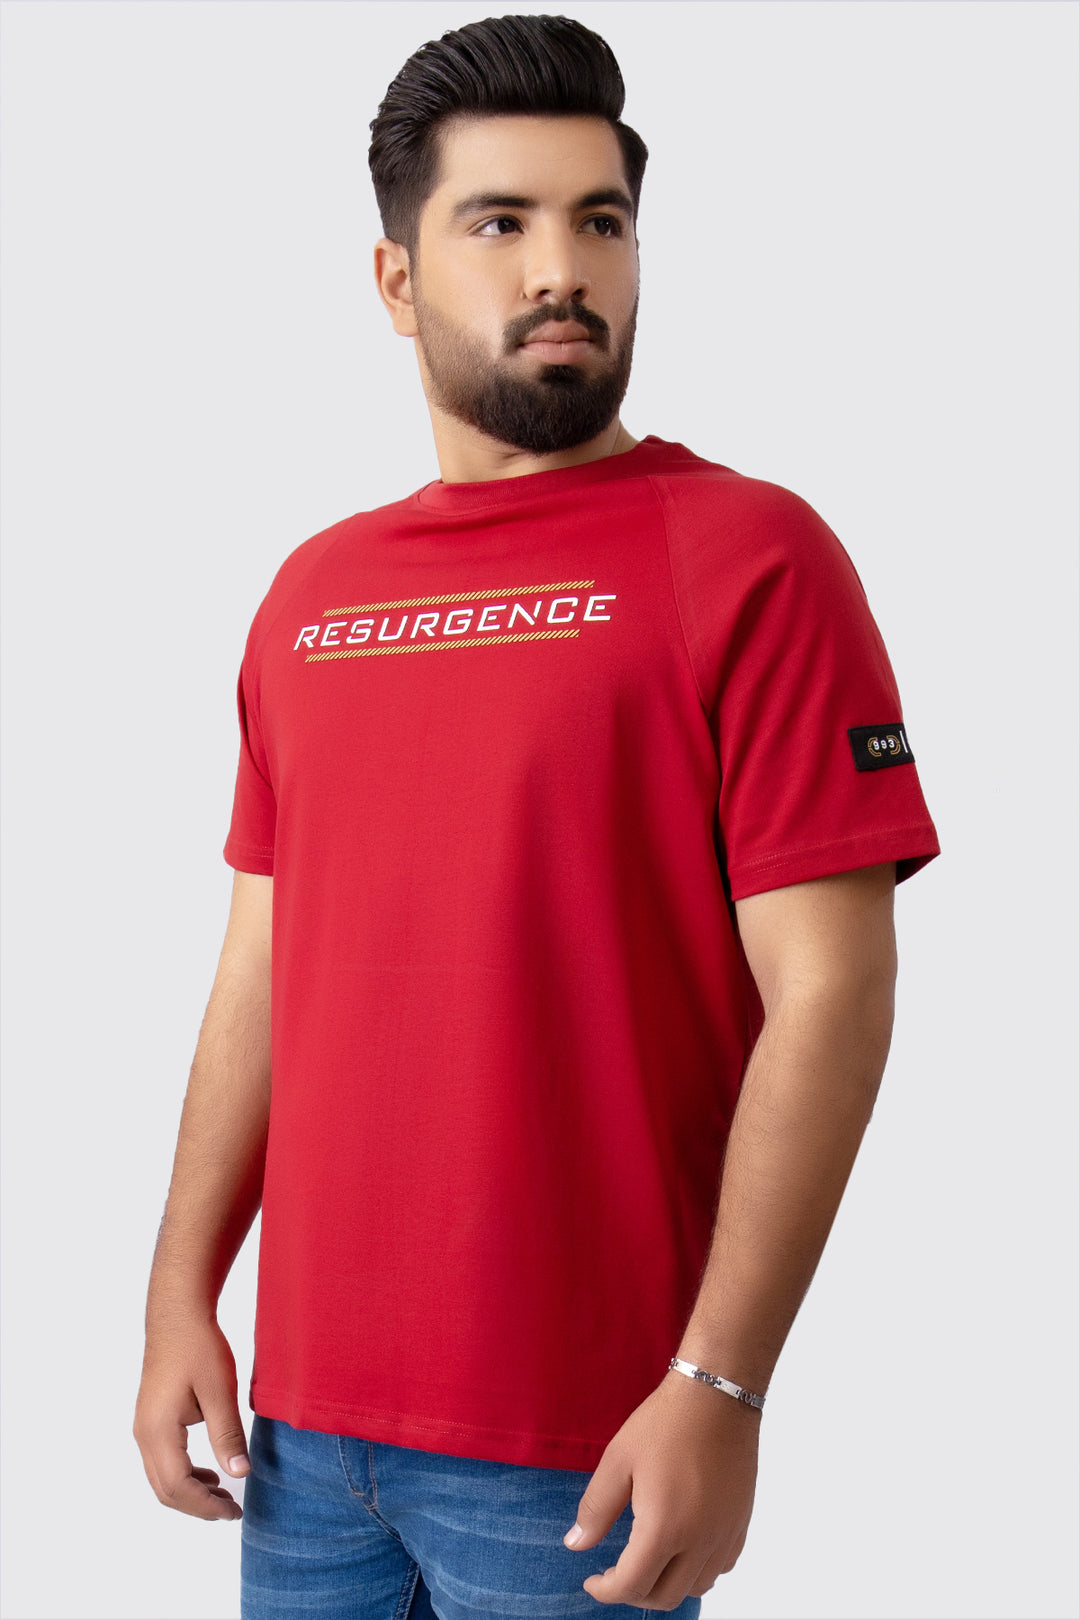 Resurgence Maroon Graphic T-Shirt (Plus Size) - A23 - MT0285P